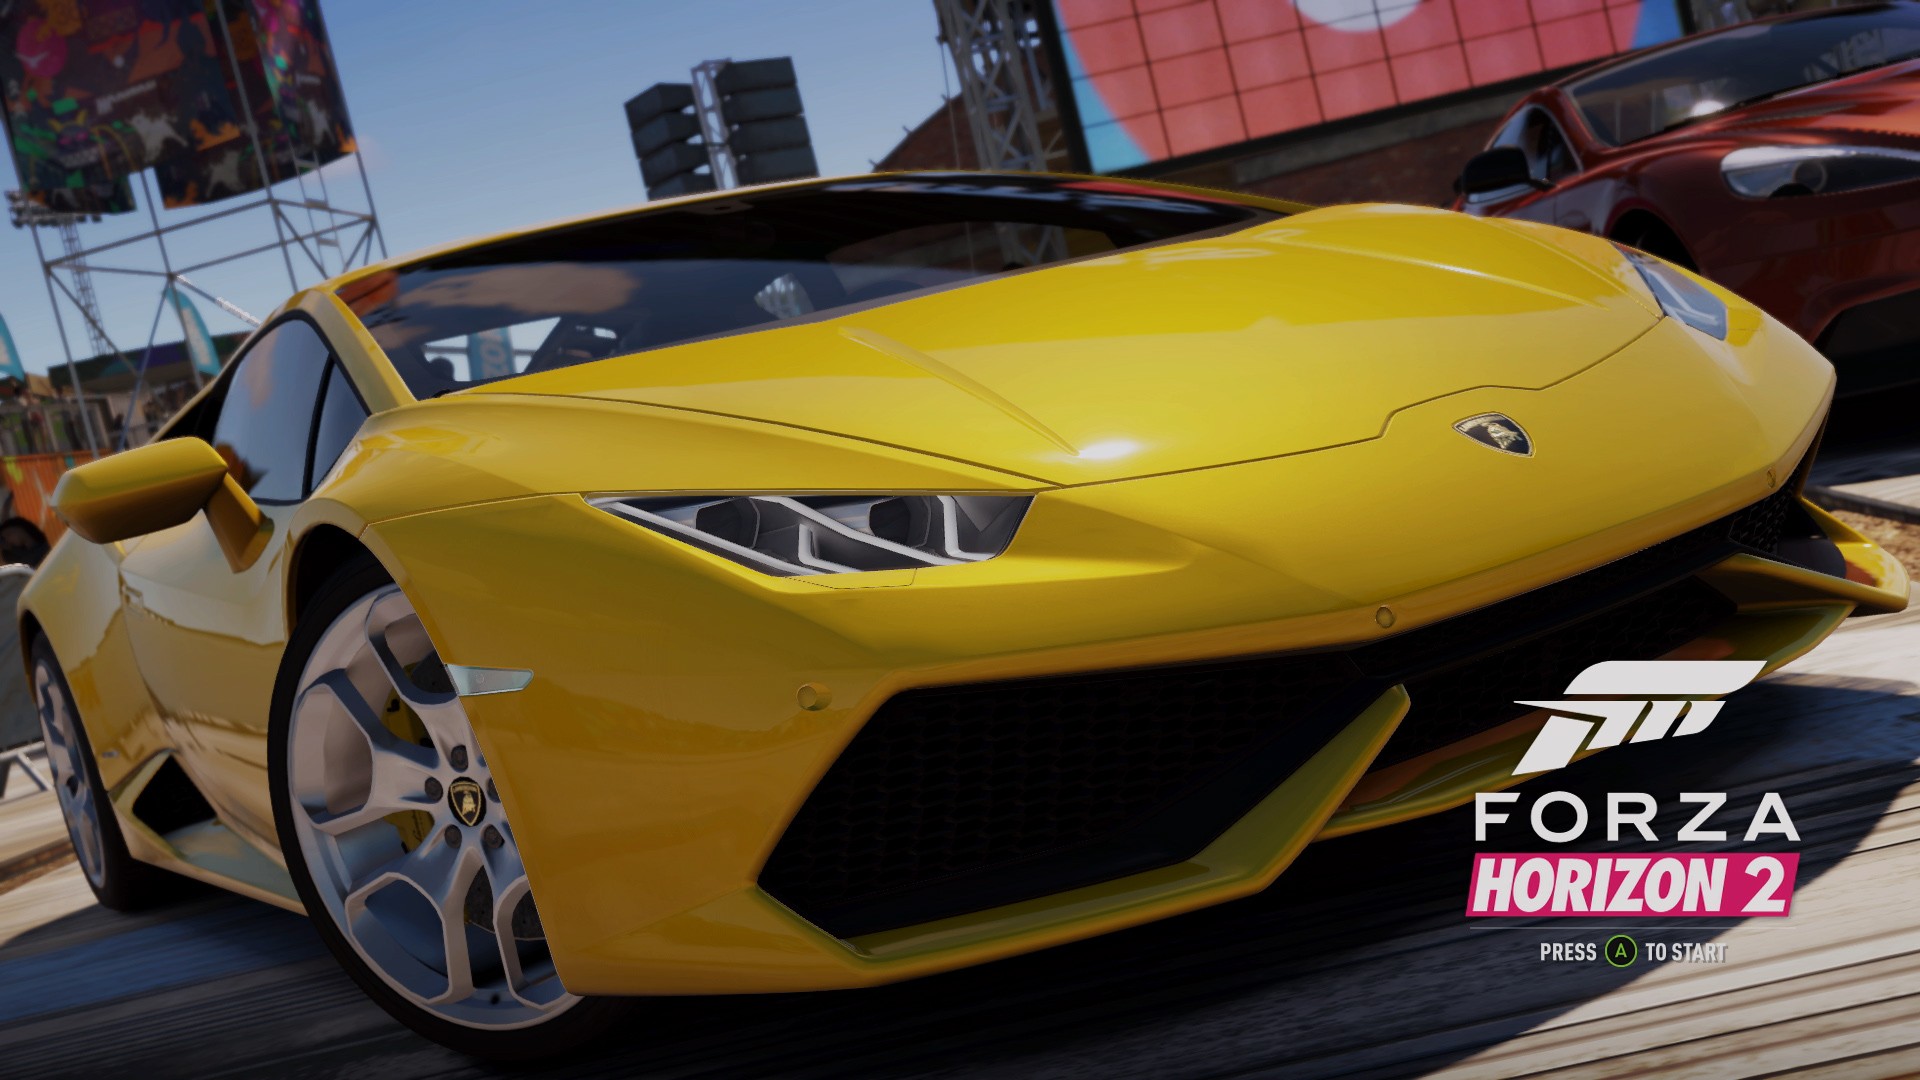 General 1920x1080 yellow cars Forza Horizon 2 video games Lamborghini Huracan supercars car vehicle Lamborghini Turn 10 Studios